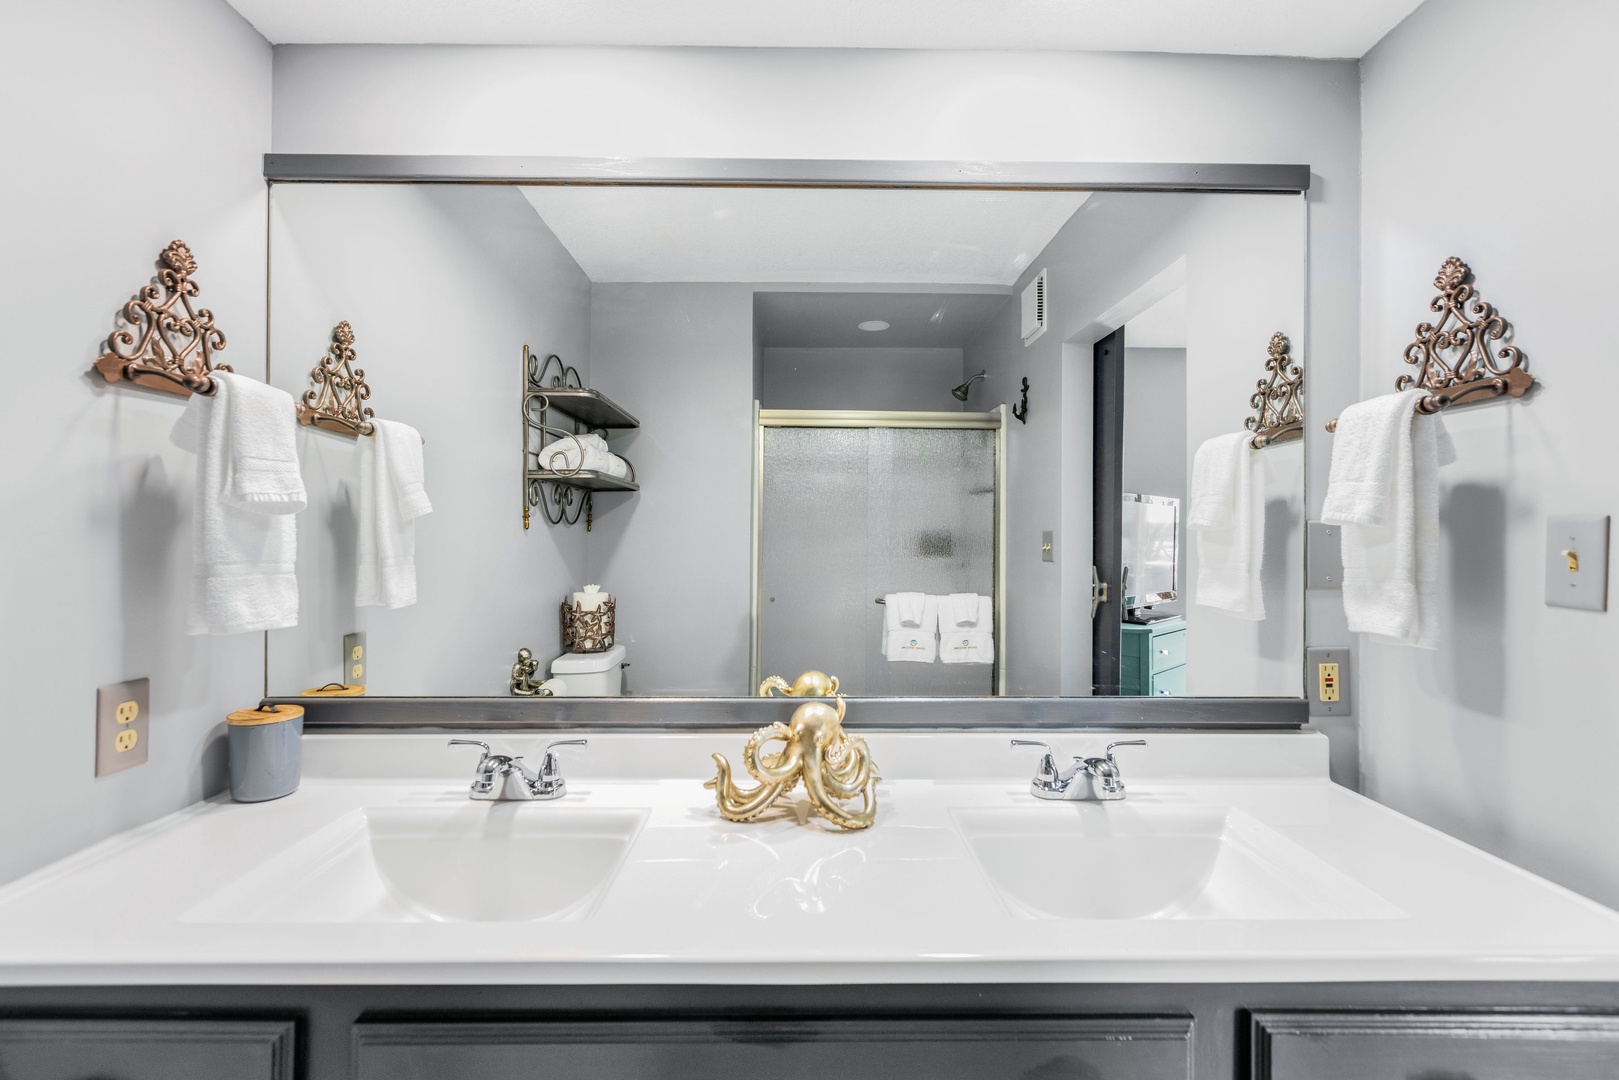 En-suite bathroom with double vanity and shower